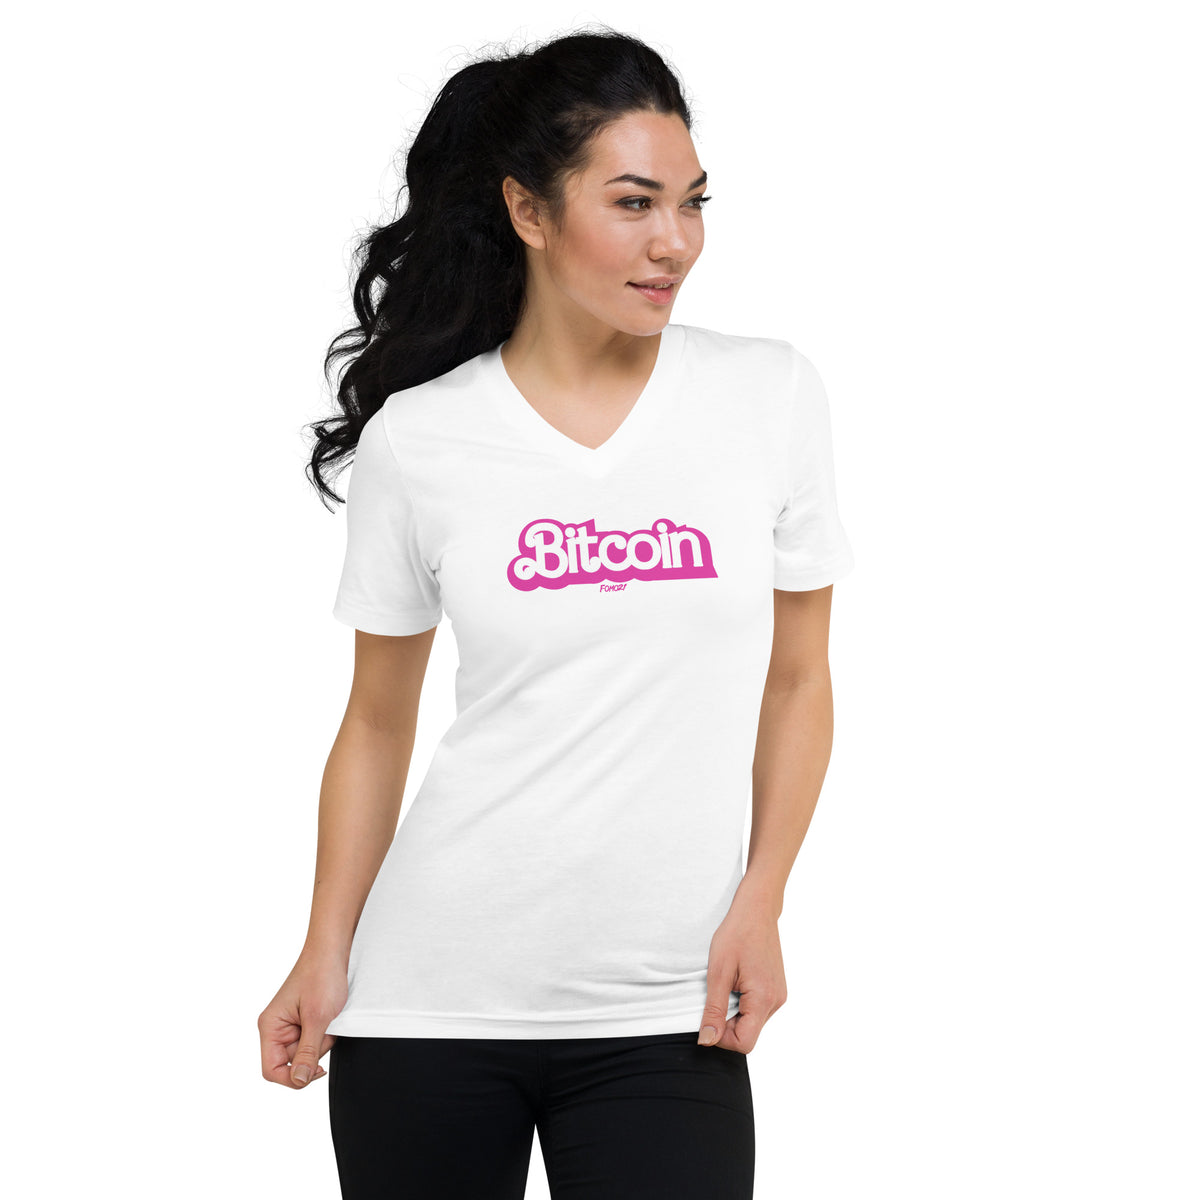 In The Bitcoin World Women's V-Neck T-Shirt - fomo21